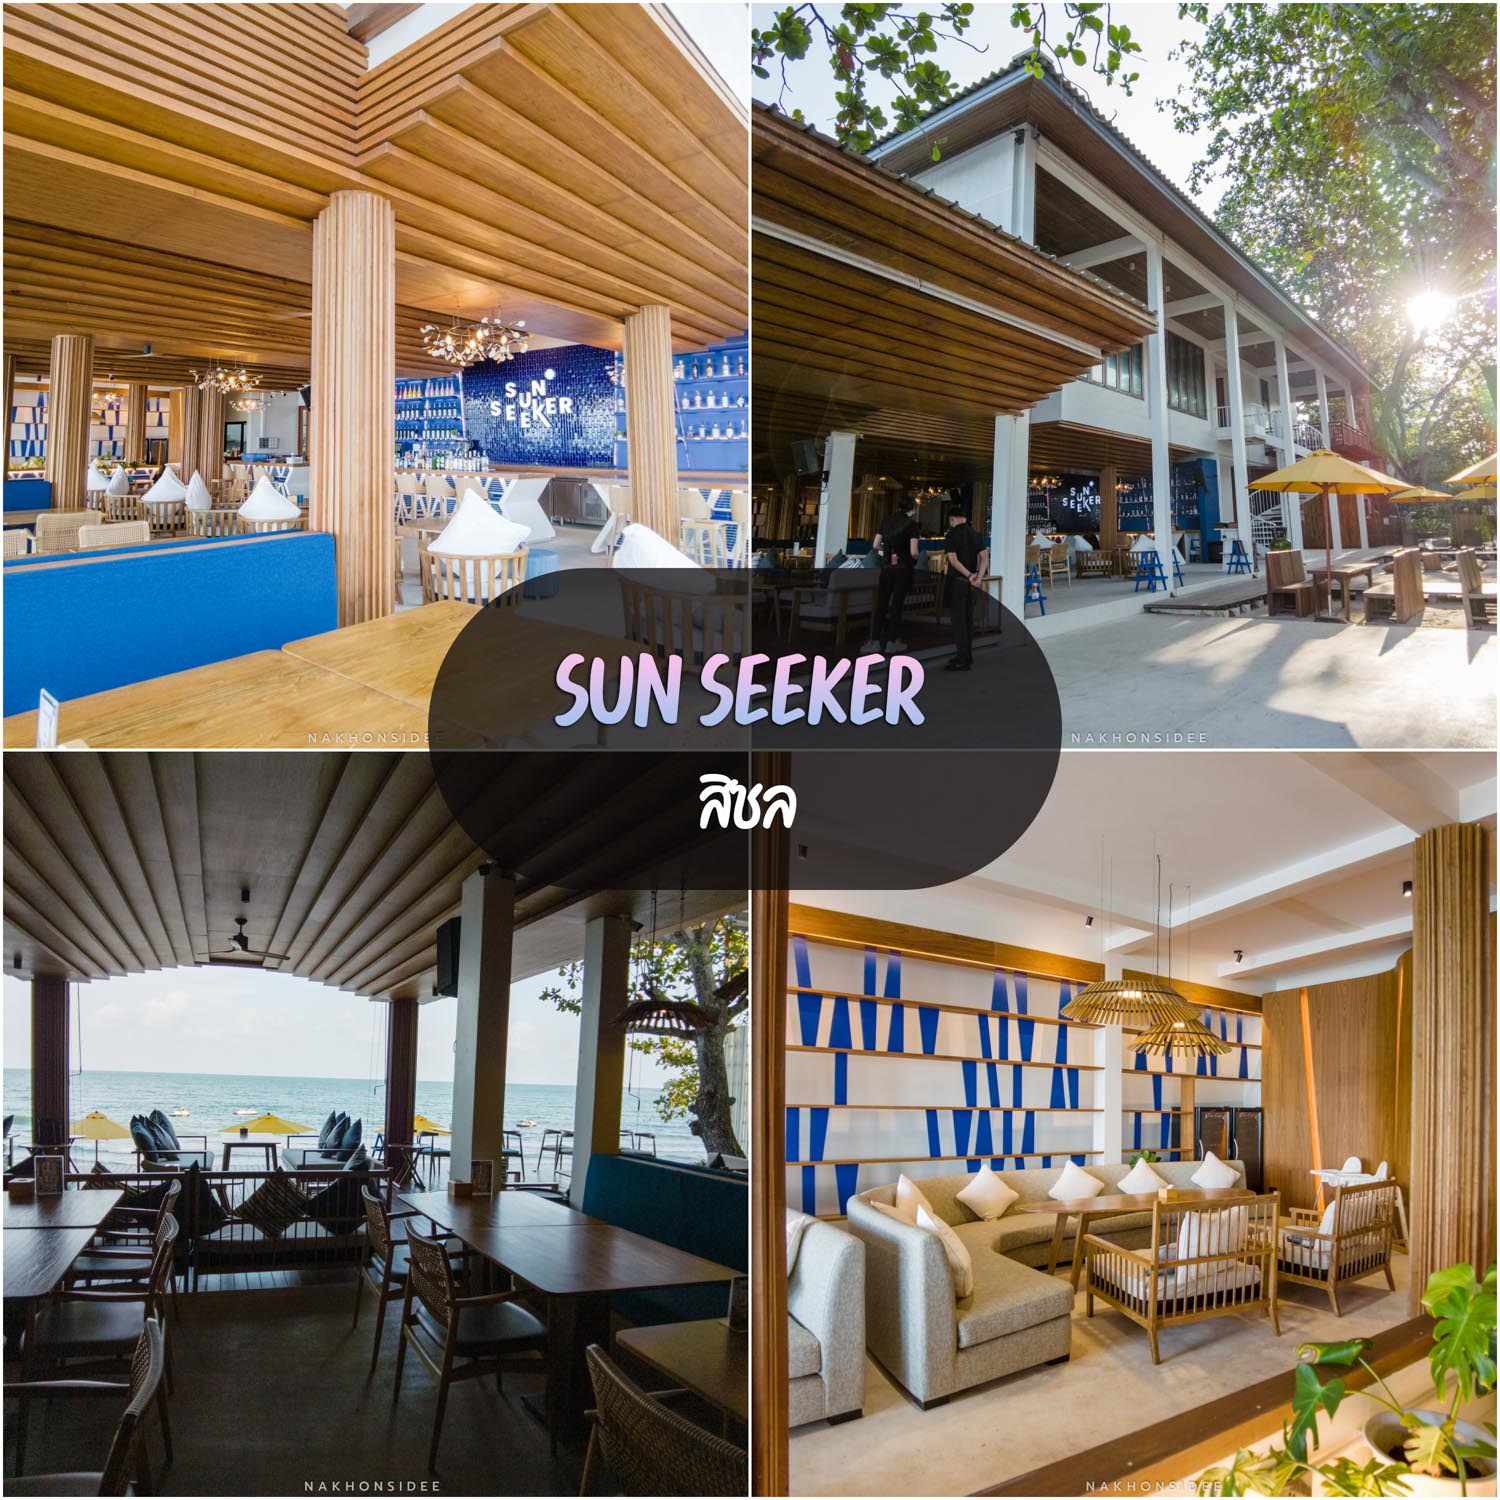 Sun-Seeker -คาเฟ่ร้านอาหารเปิดใหม่-หน้าโรงแรมสิชลคาบาน่าครับ
 ที่เที่ยวนครศรีธรรมราช,จุดเช็คอินนครศรีธรรมราช,ร้านอาหารนครศรีธรรมราช